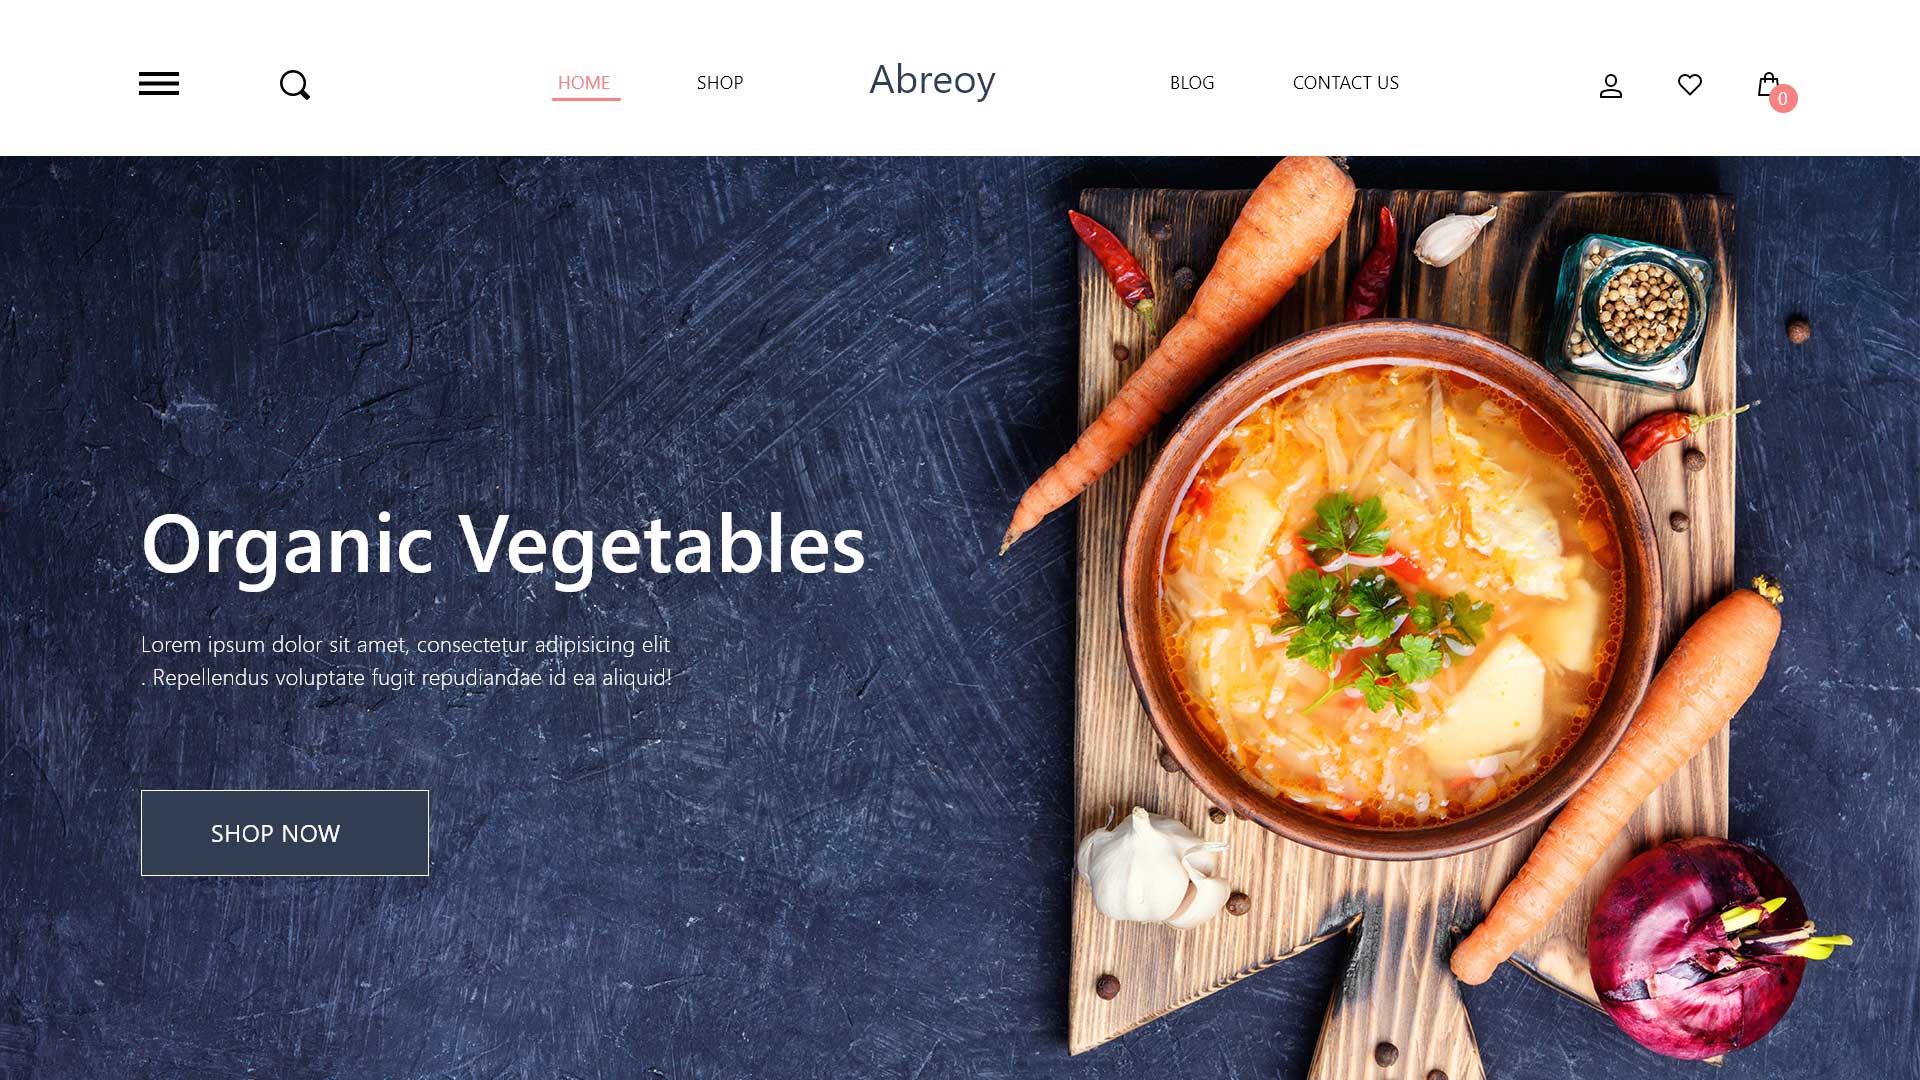 Abreoy成套电商app ui设计 .xd素材下载